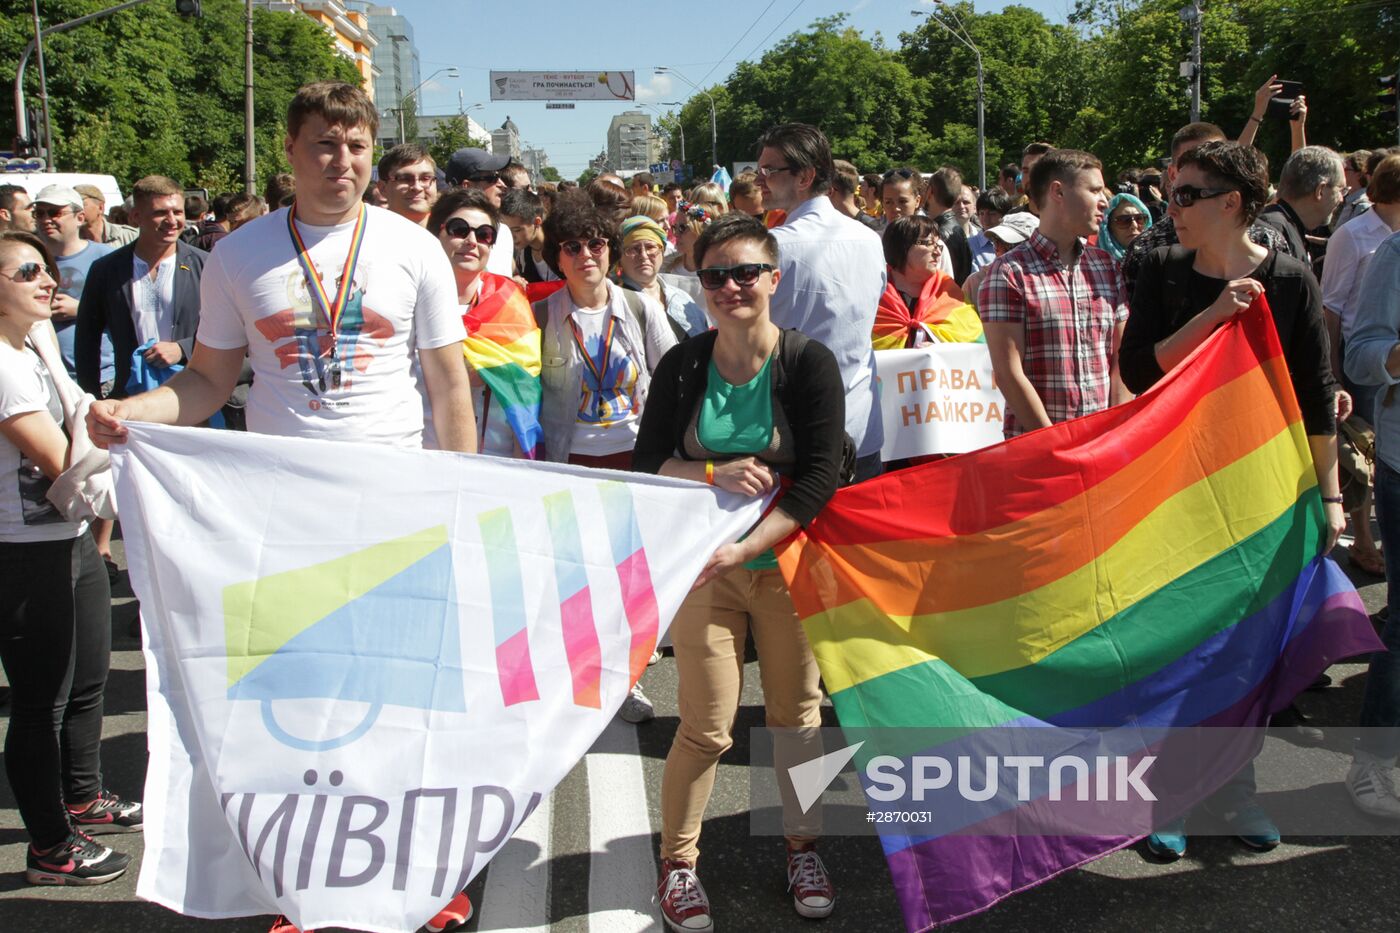 Kiev Pride 2016 LGBT parade